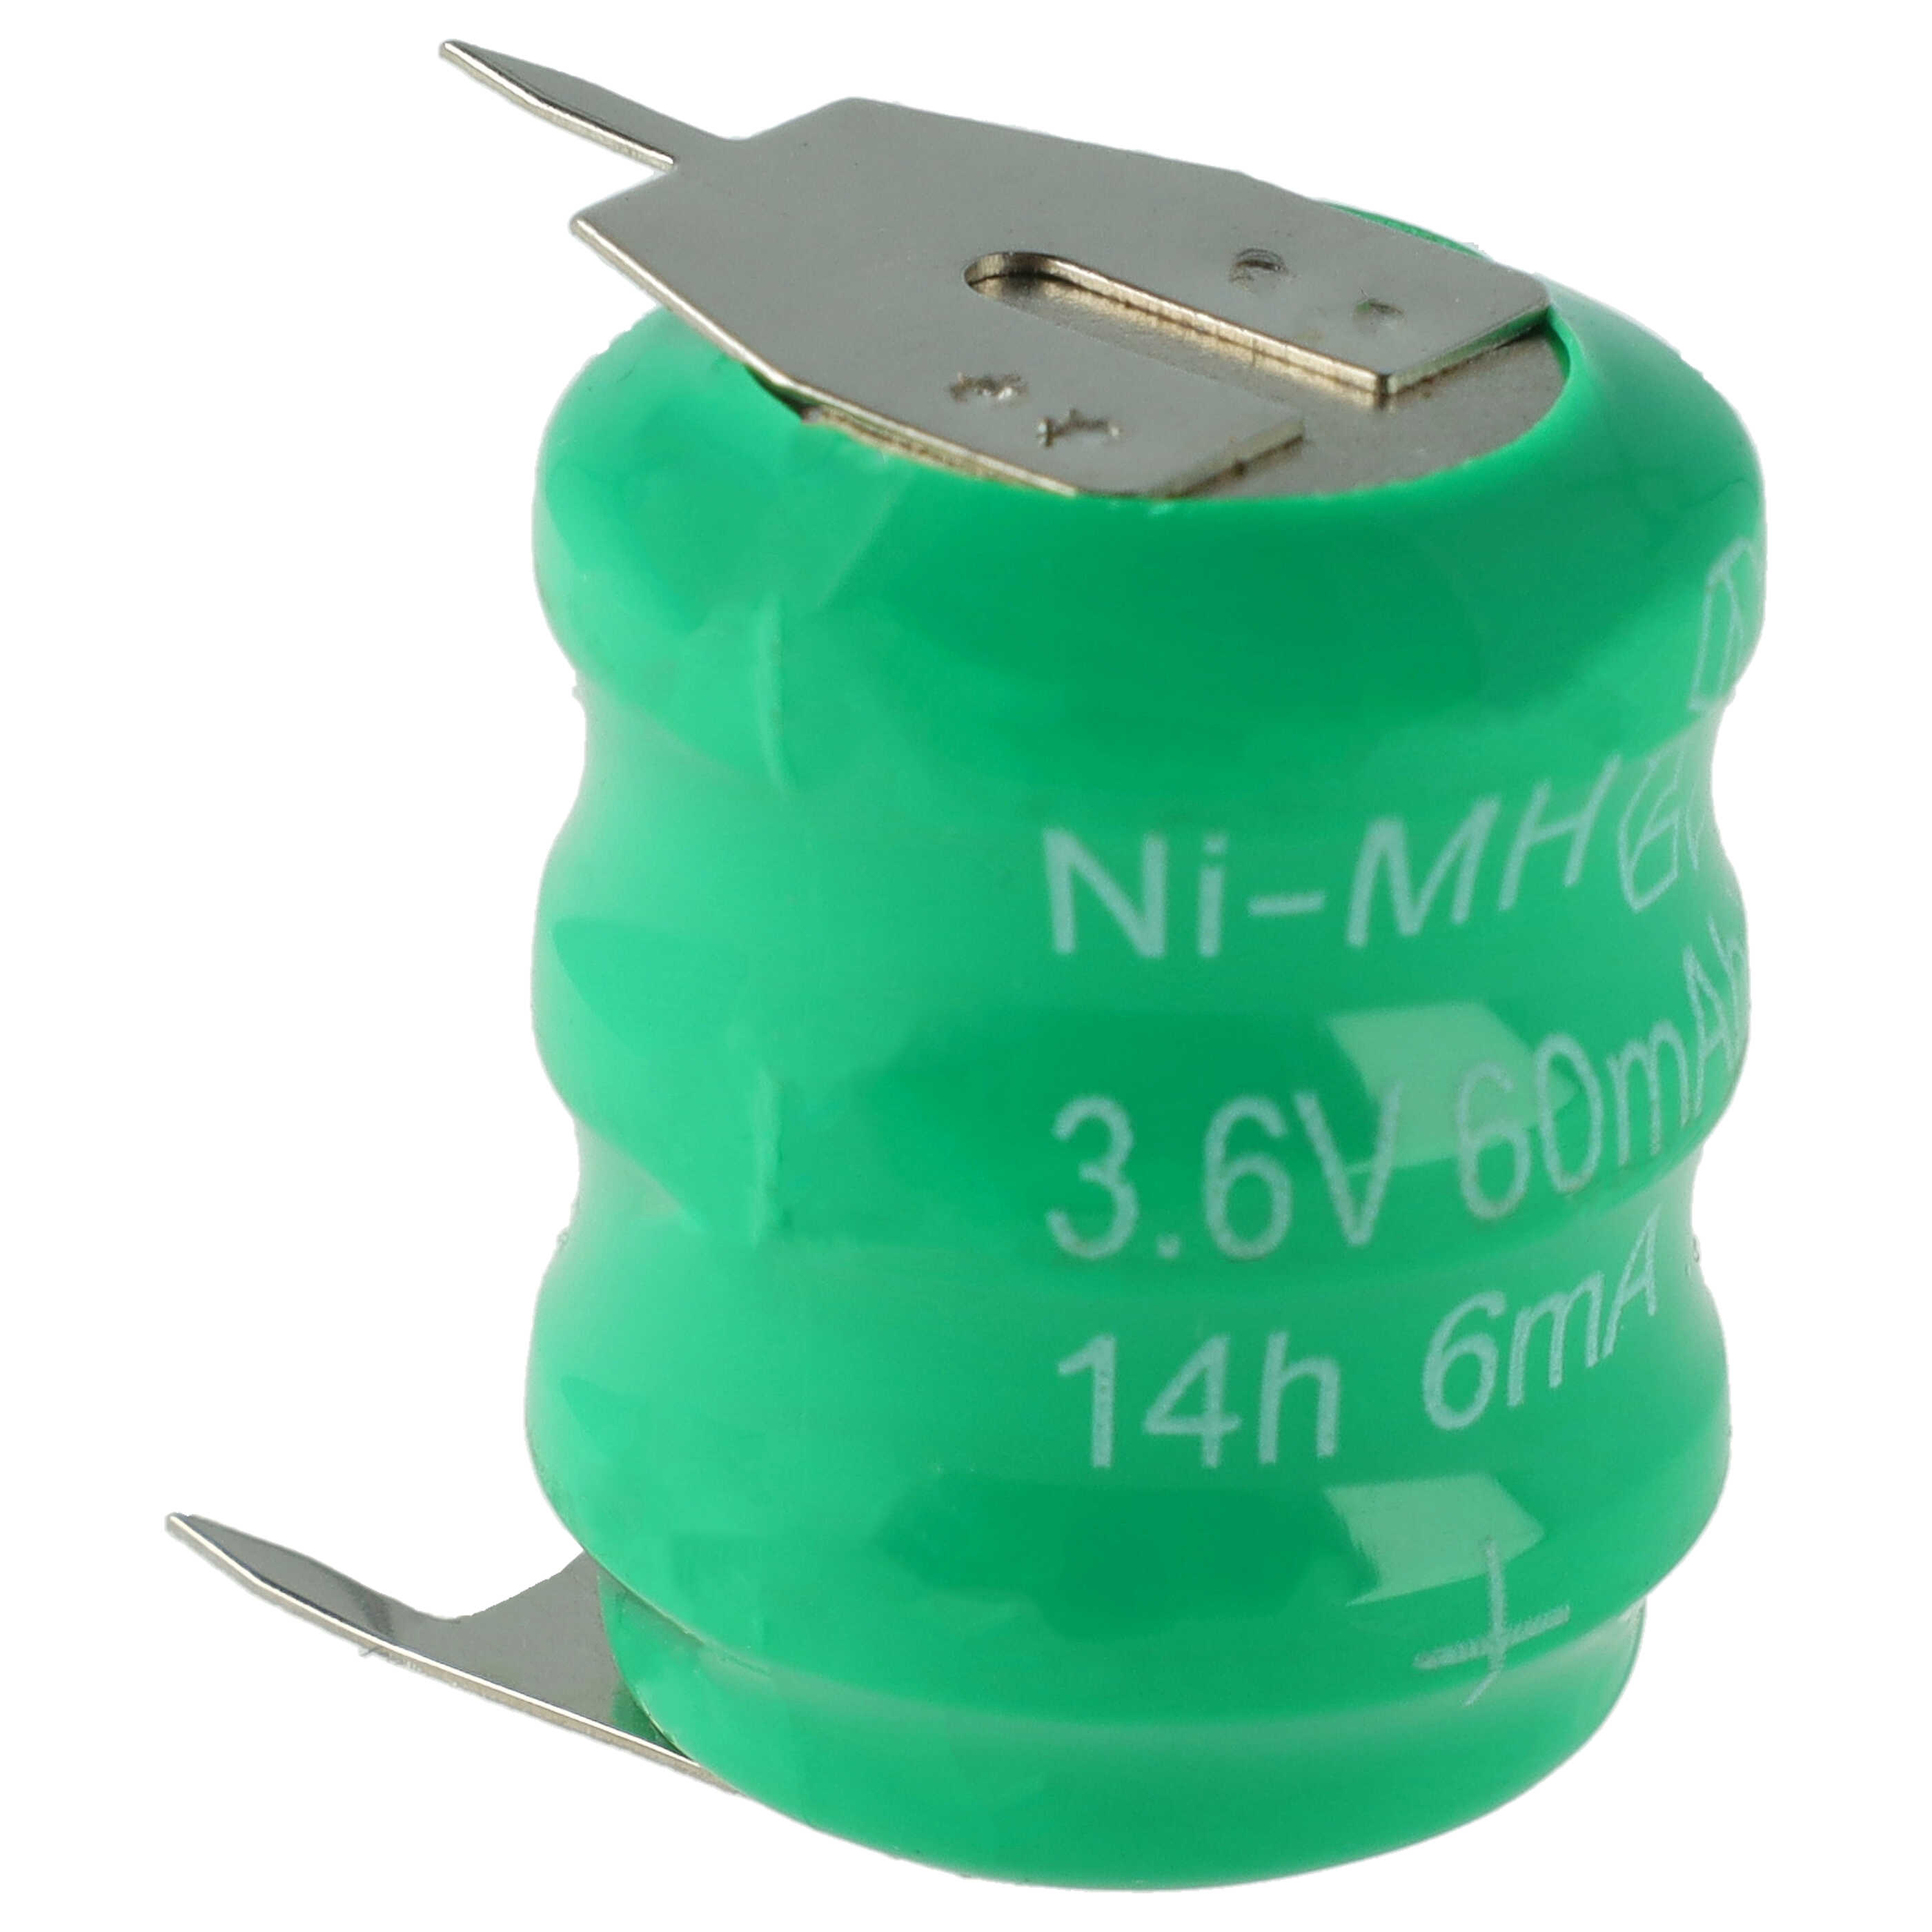 Akumulator guzikowy typ 3/V80H 3 pin do modeli, lamp solarnych itp. zamiennik 3/V80H - 60 mAh 3,6 V NiMH